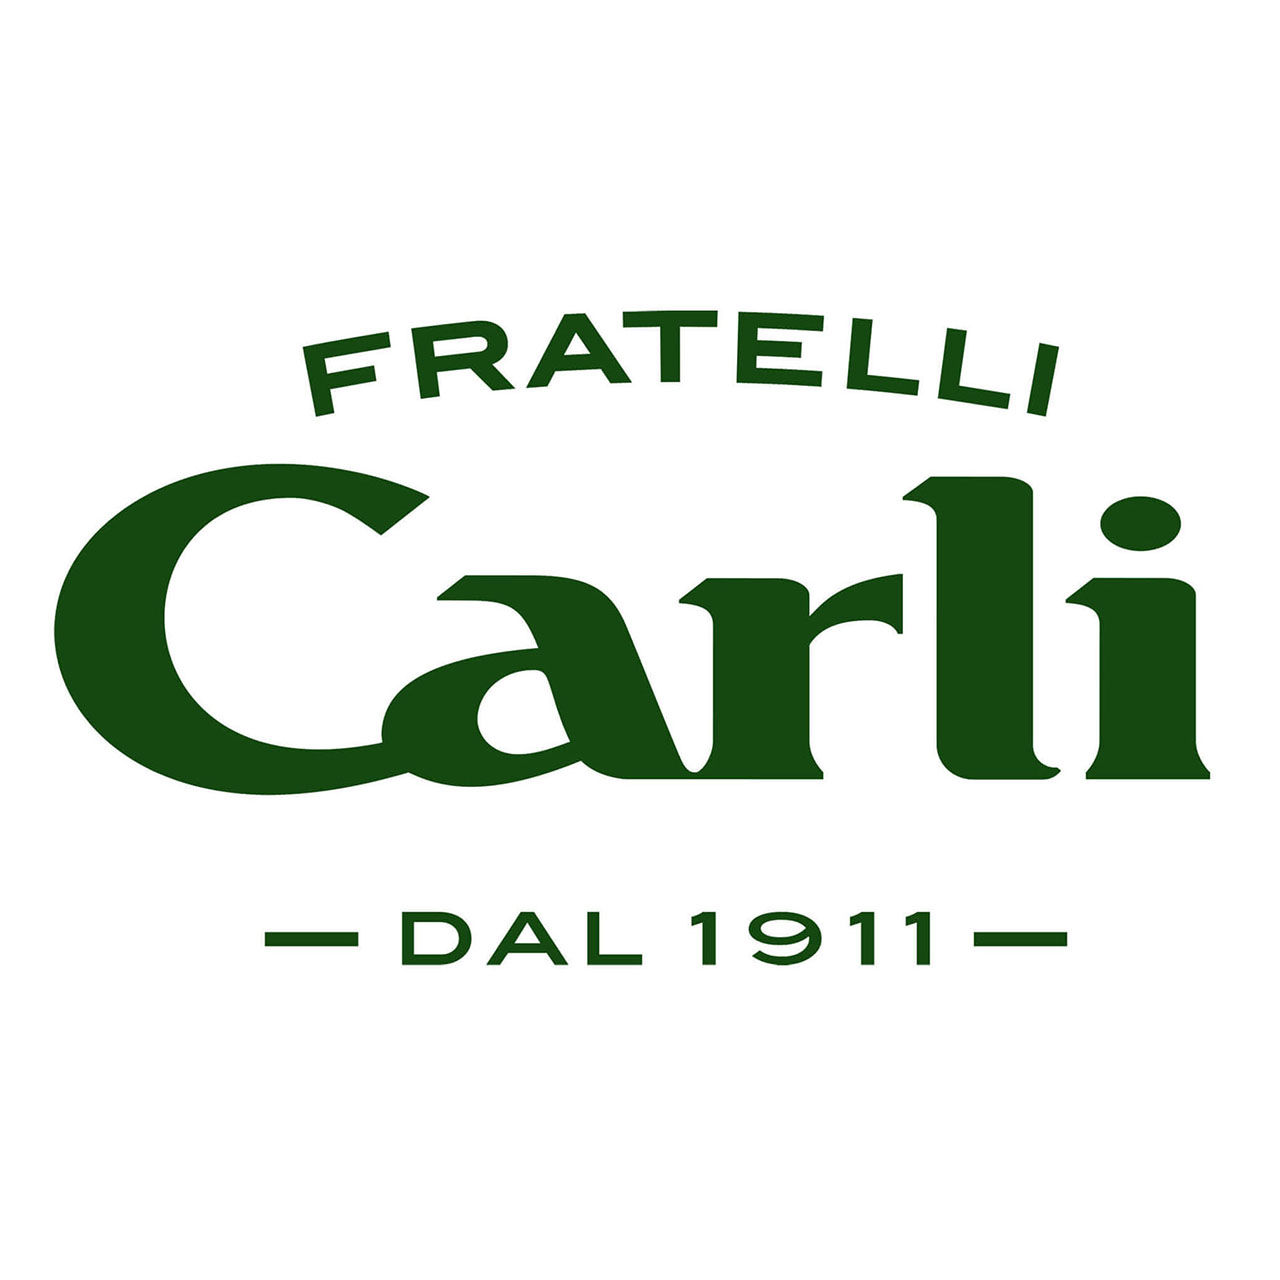 Logo Fratelli Carli